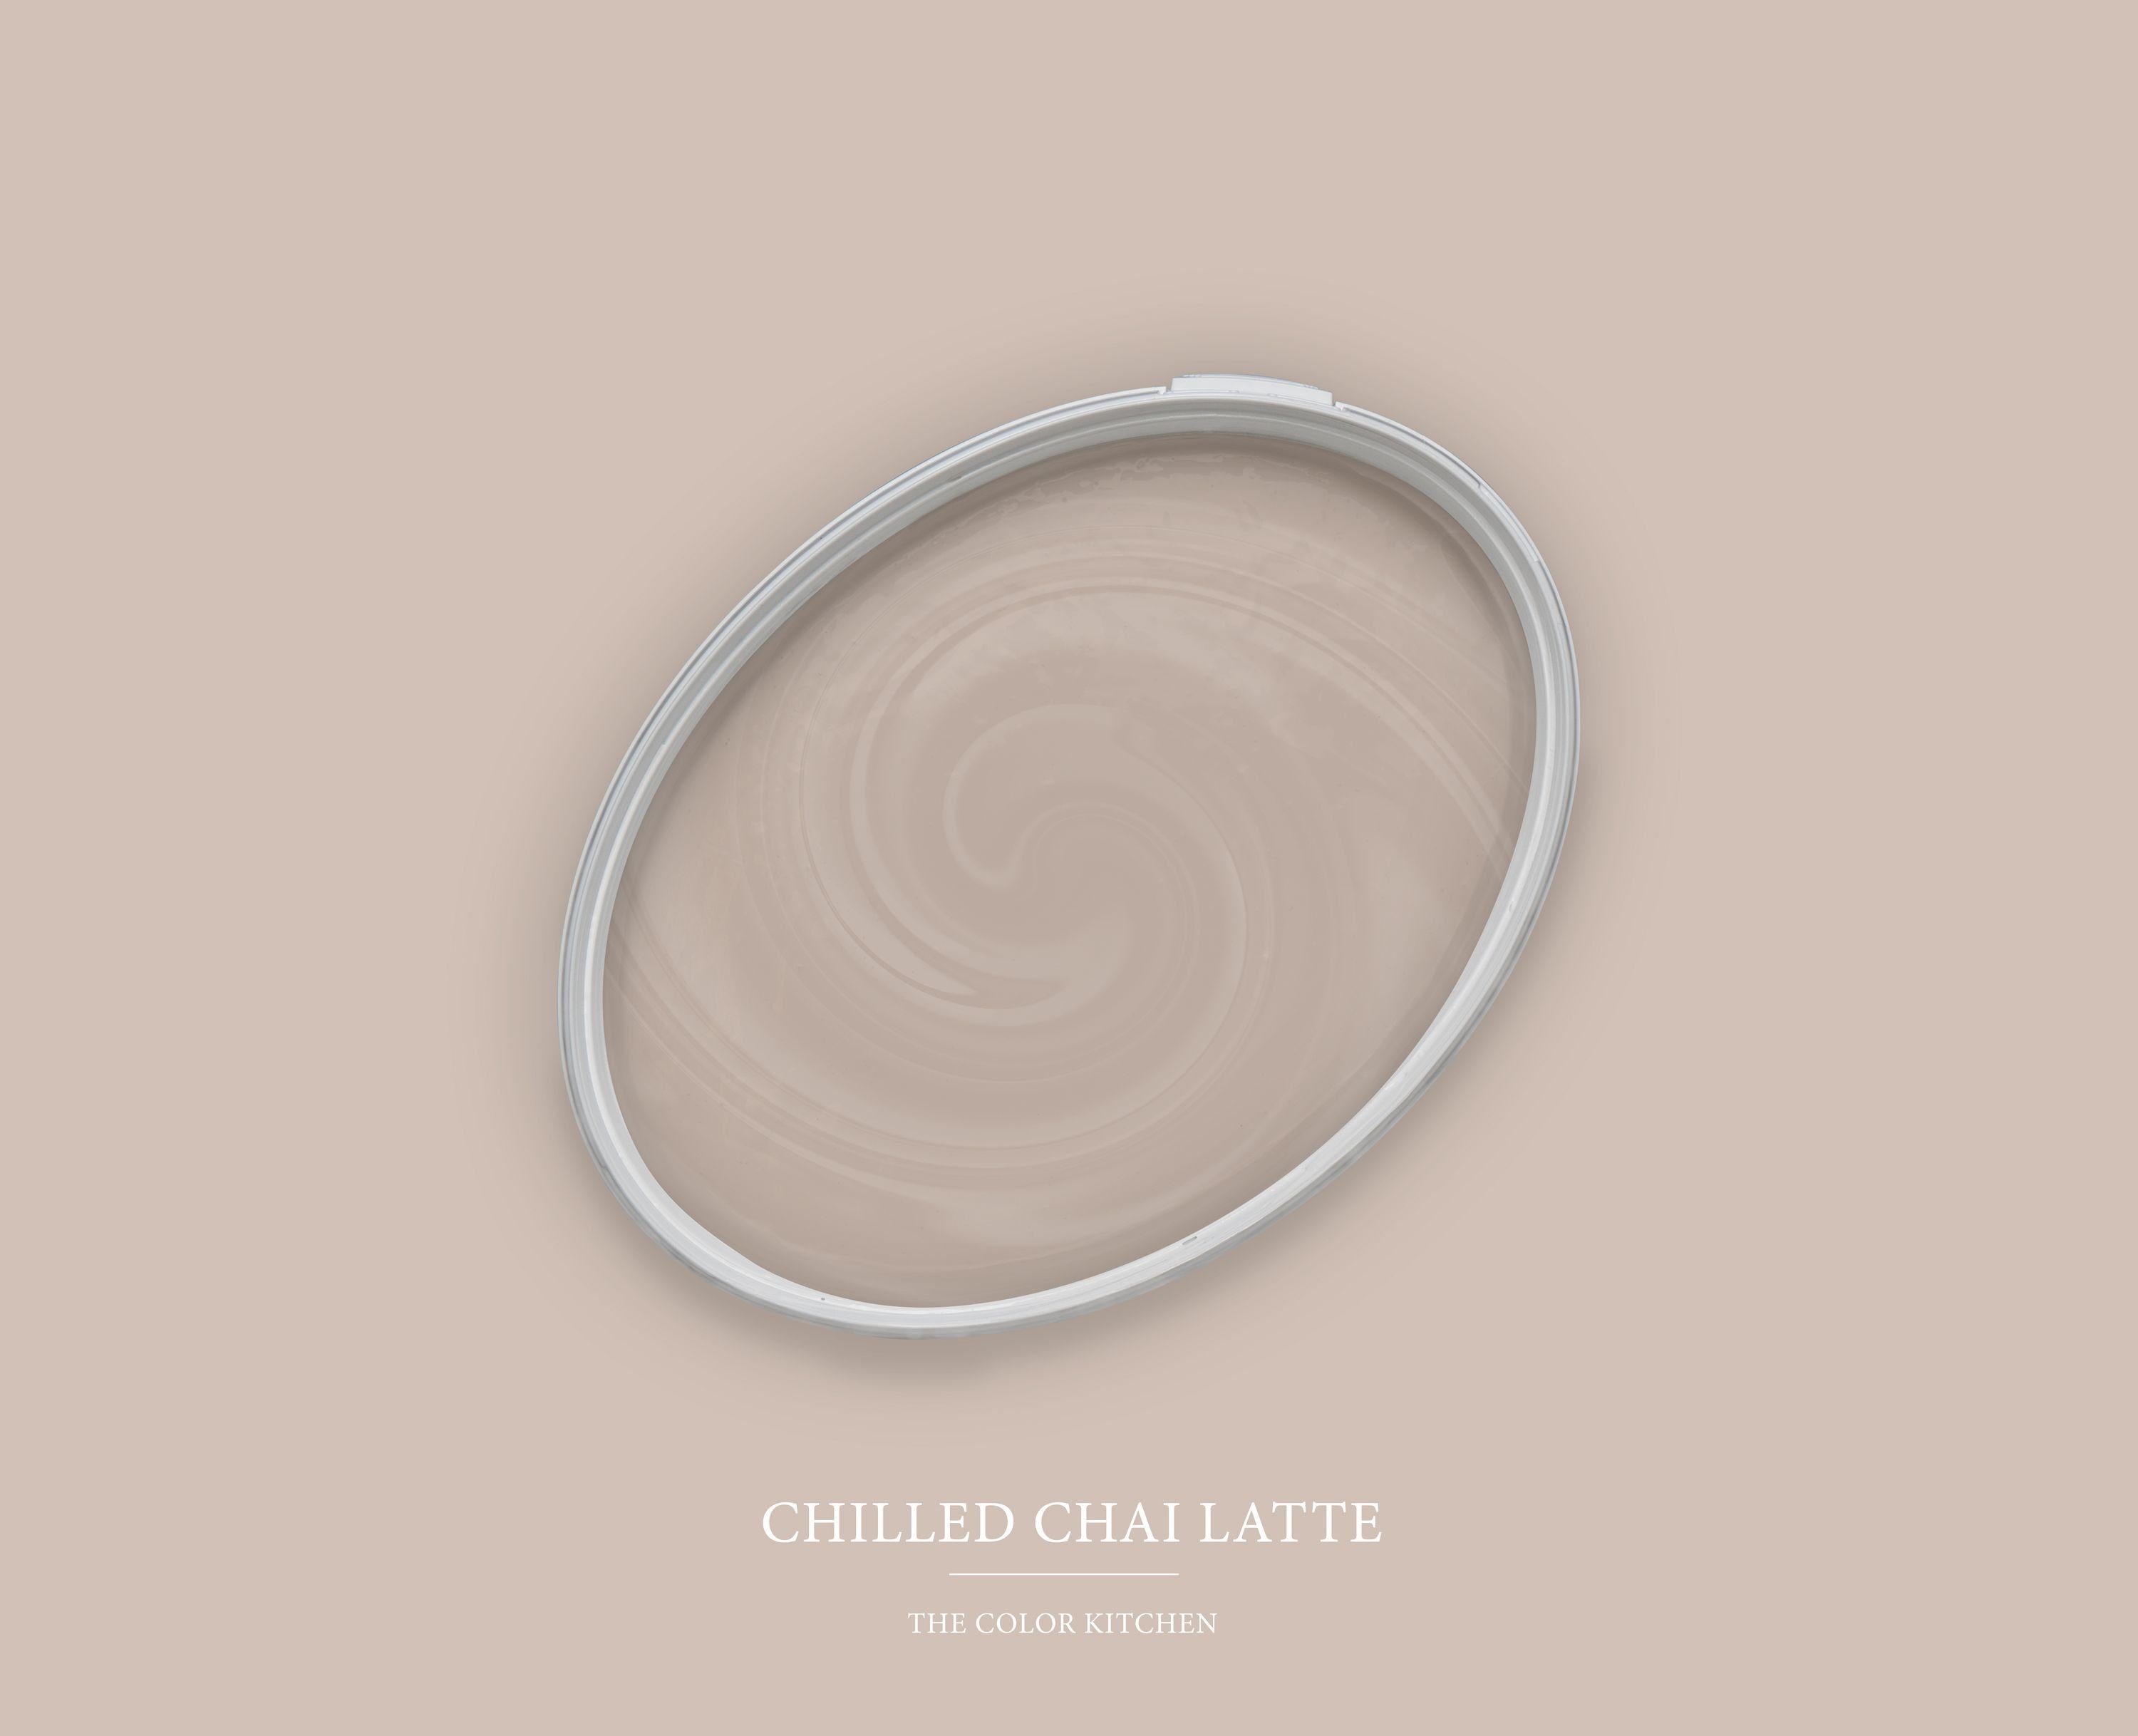 A.S. Chai 5l Innenfarbe Wand- Wandfarbe, Chilled Latte Deckenfarbe Seidenmatt 6017 Création